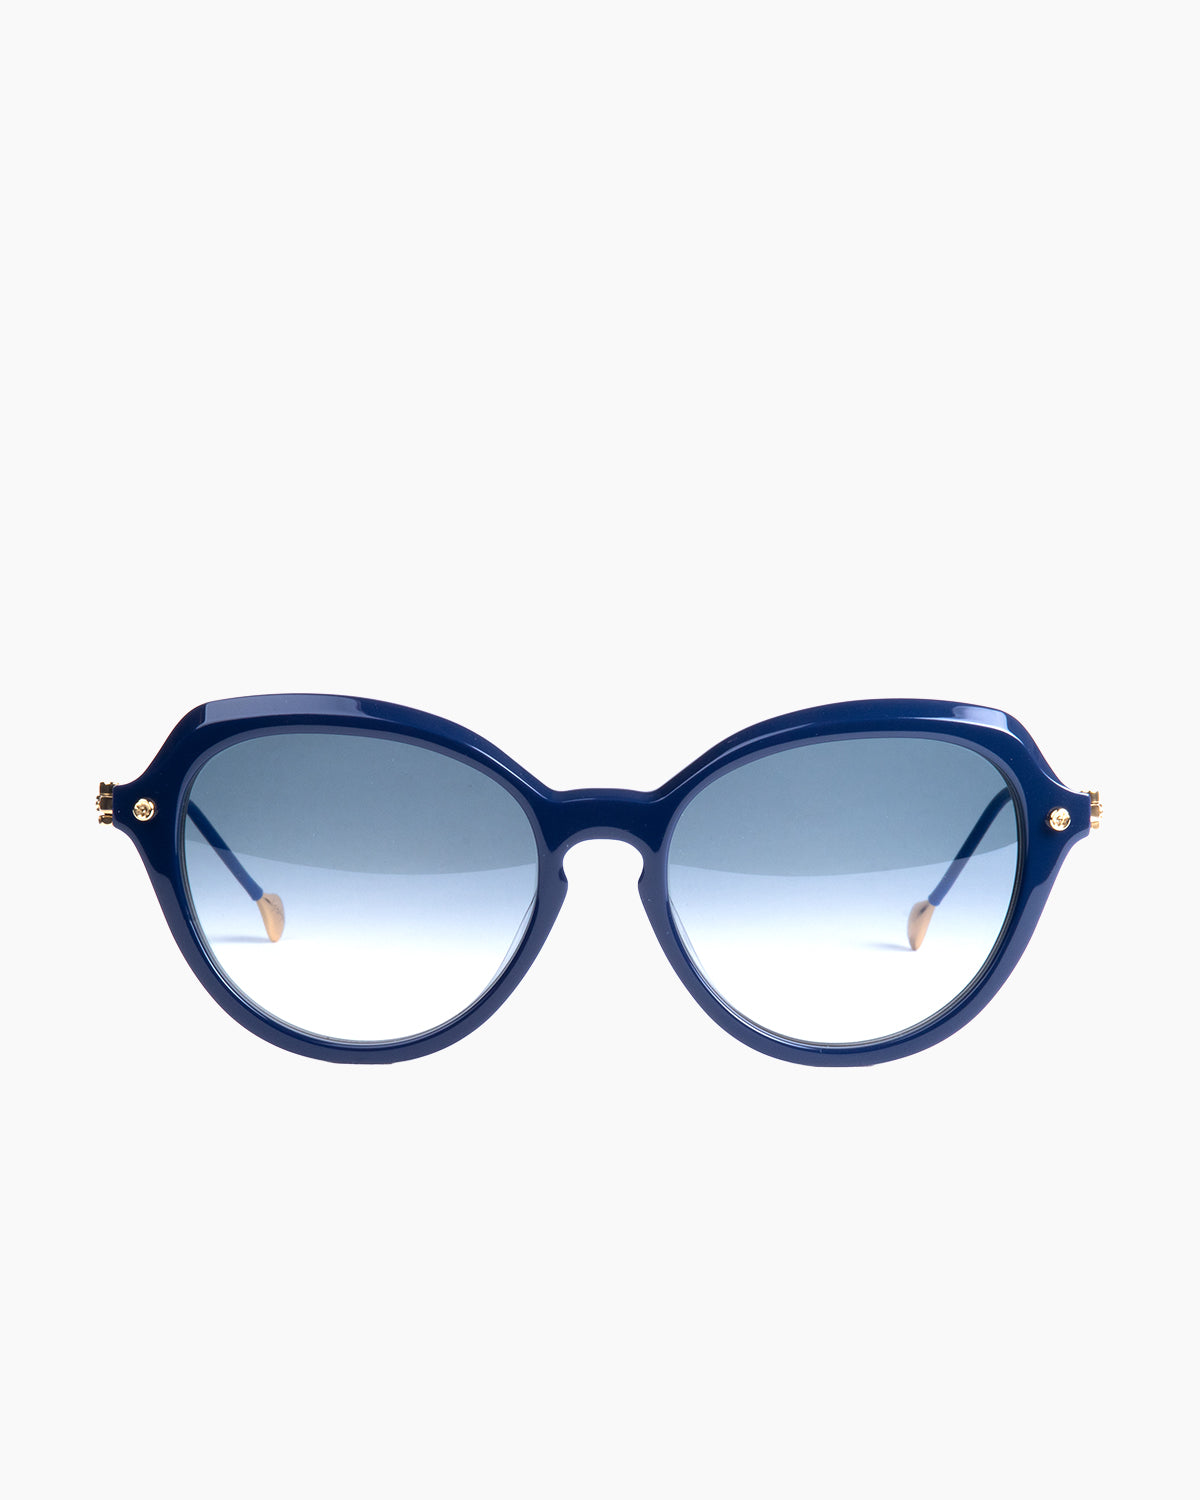 Yohji Yamamoto - Slook008 - m003 | glasses bar:  Marie-Sophie Dion